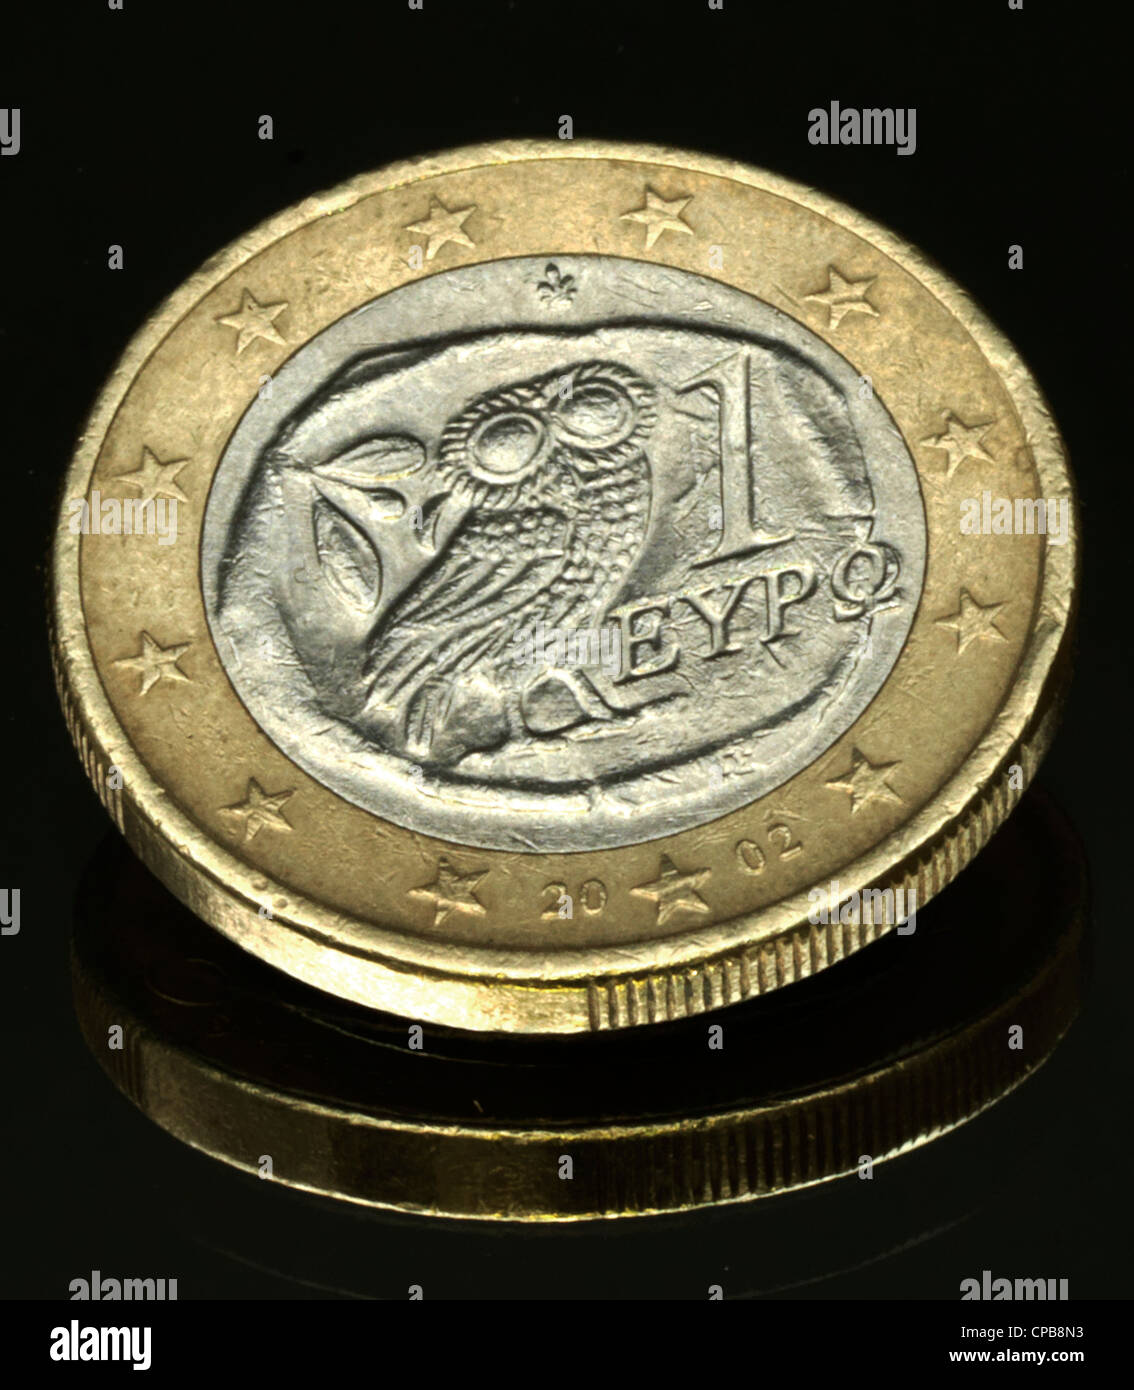 Euro from Greek griechischer Euro Euroabwertung currency devaluation depreciation inflation Stock Photo